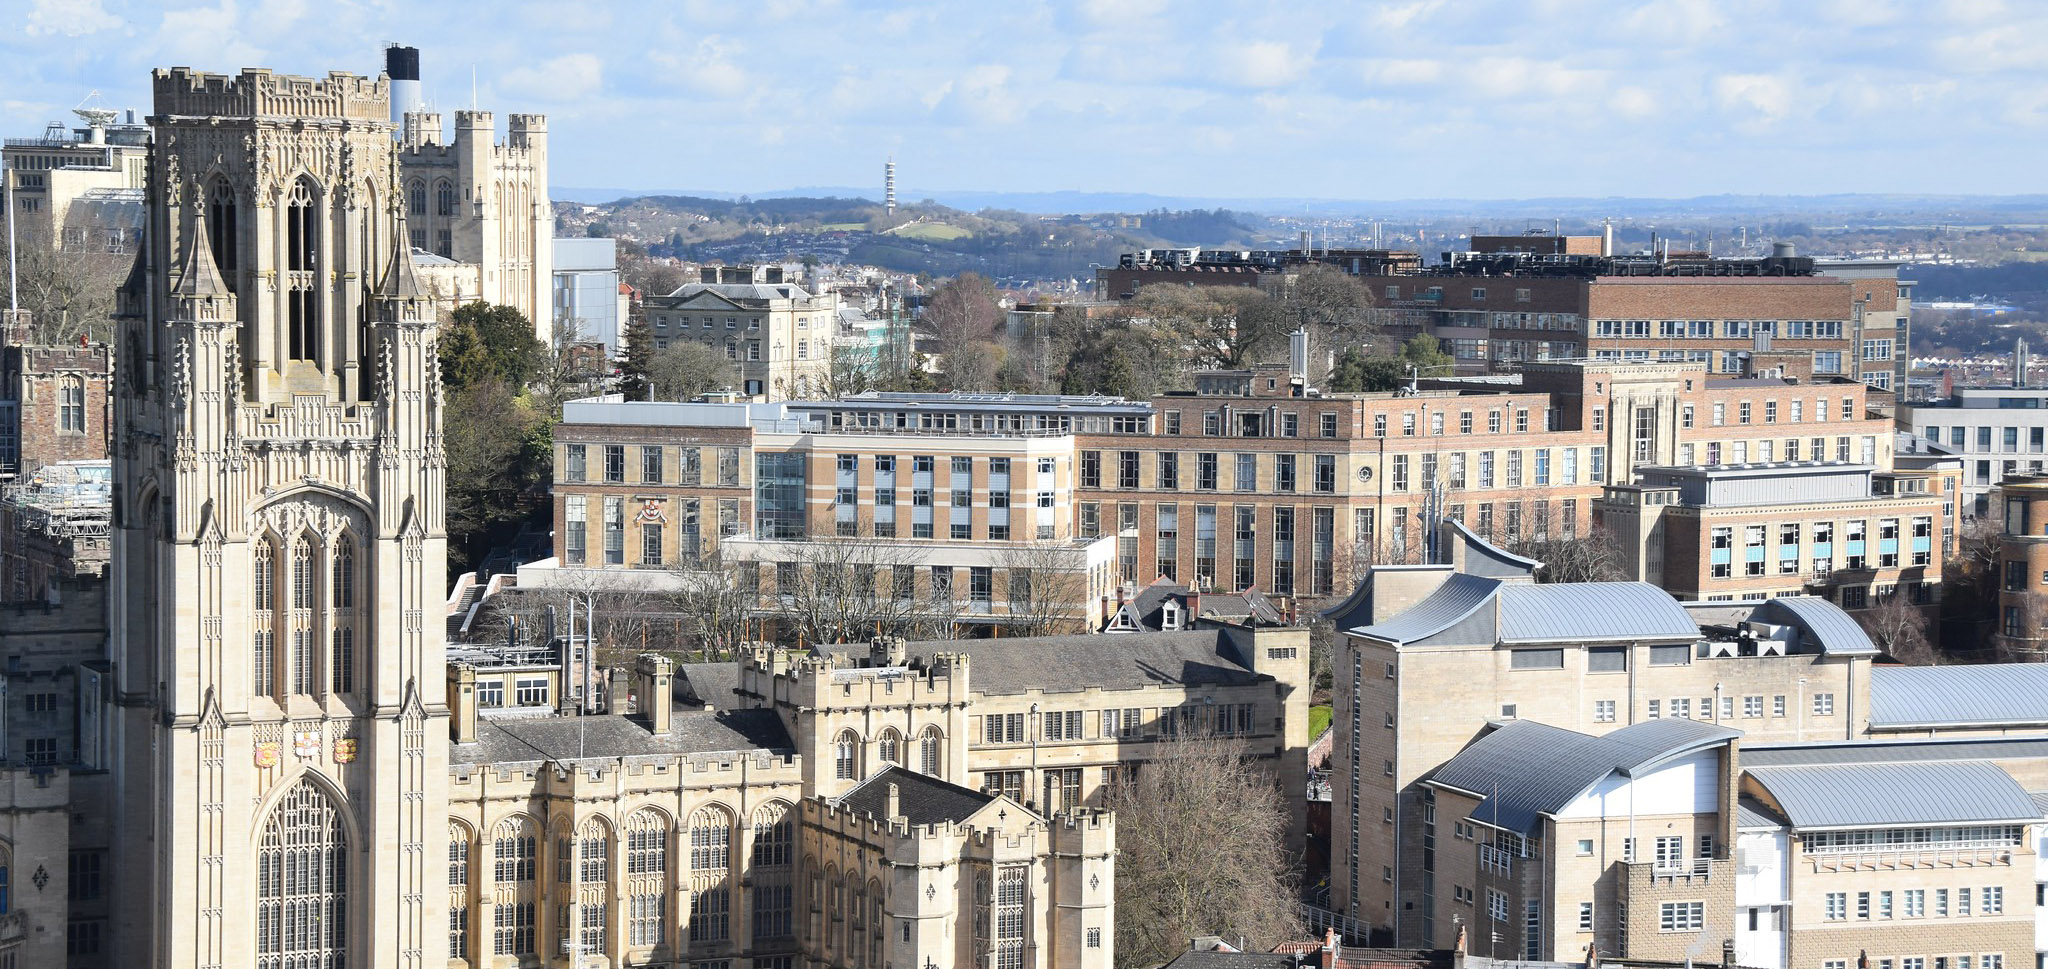 Skyline of Bristol with University of Bristol in foreground